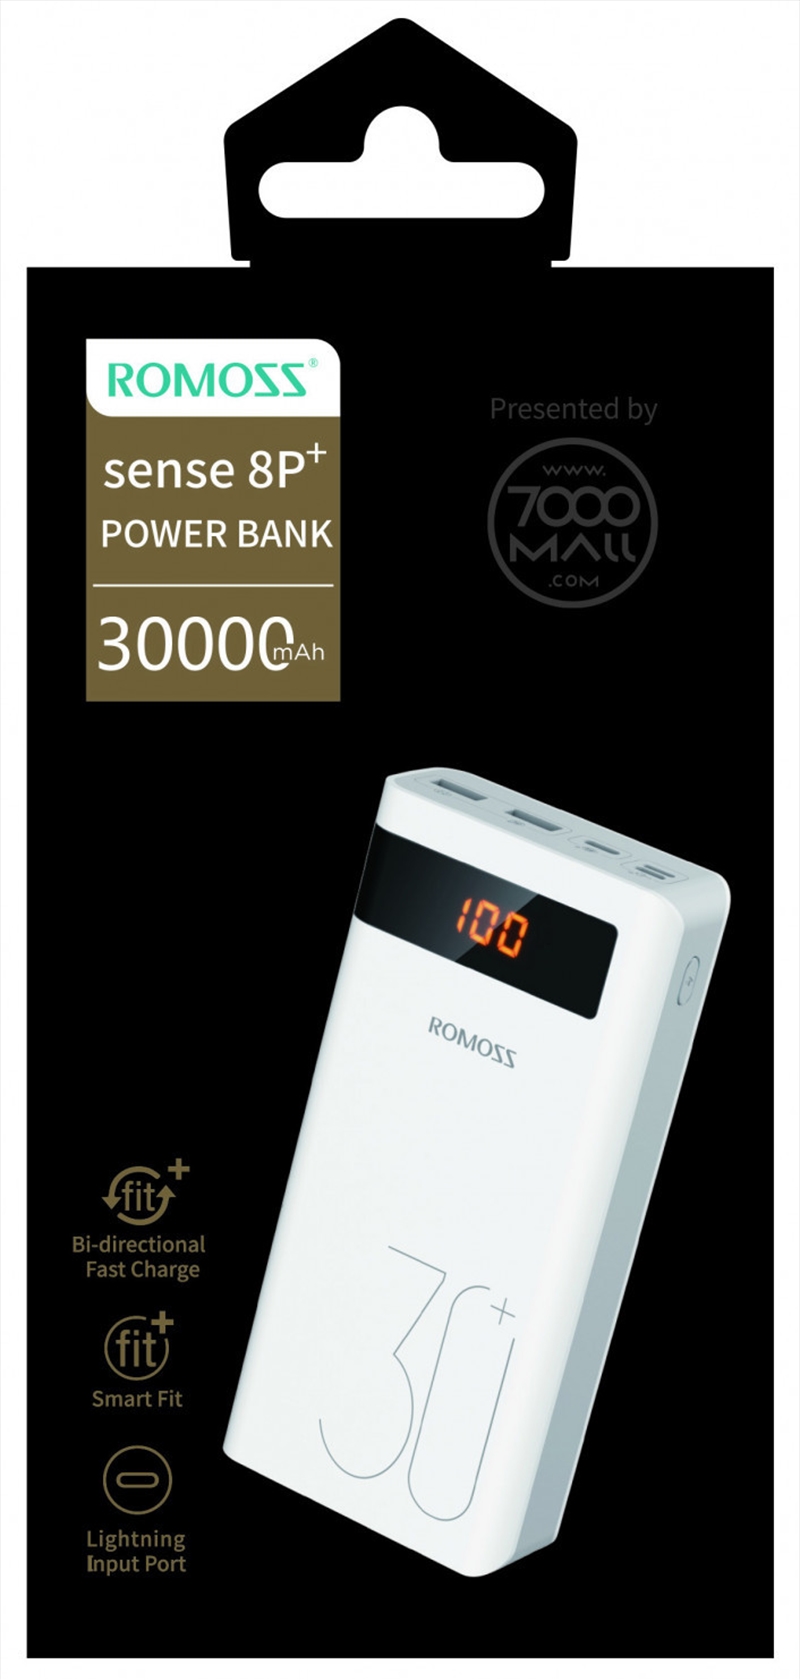 Romoss Power Bank Sense 8P+ 30,000 mAh Fast Charging/Product Detail/Power Adaptors